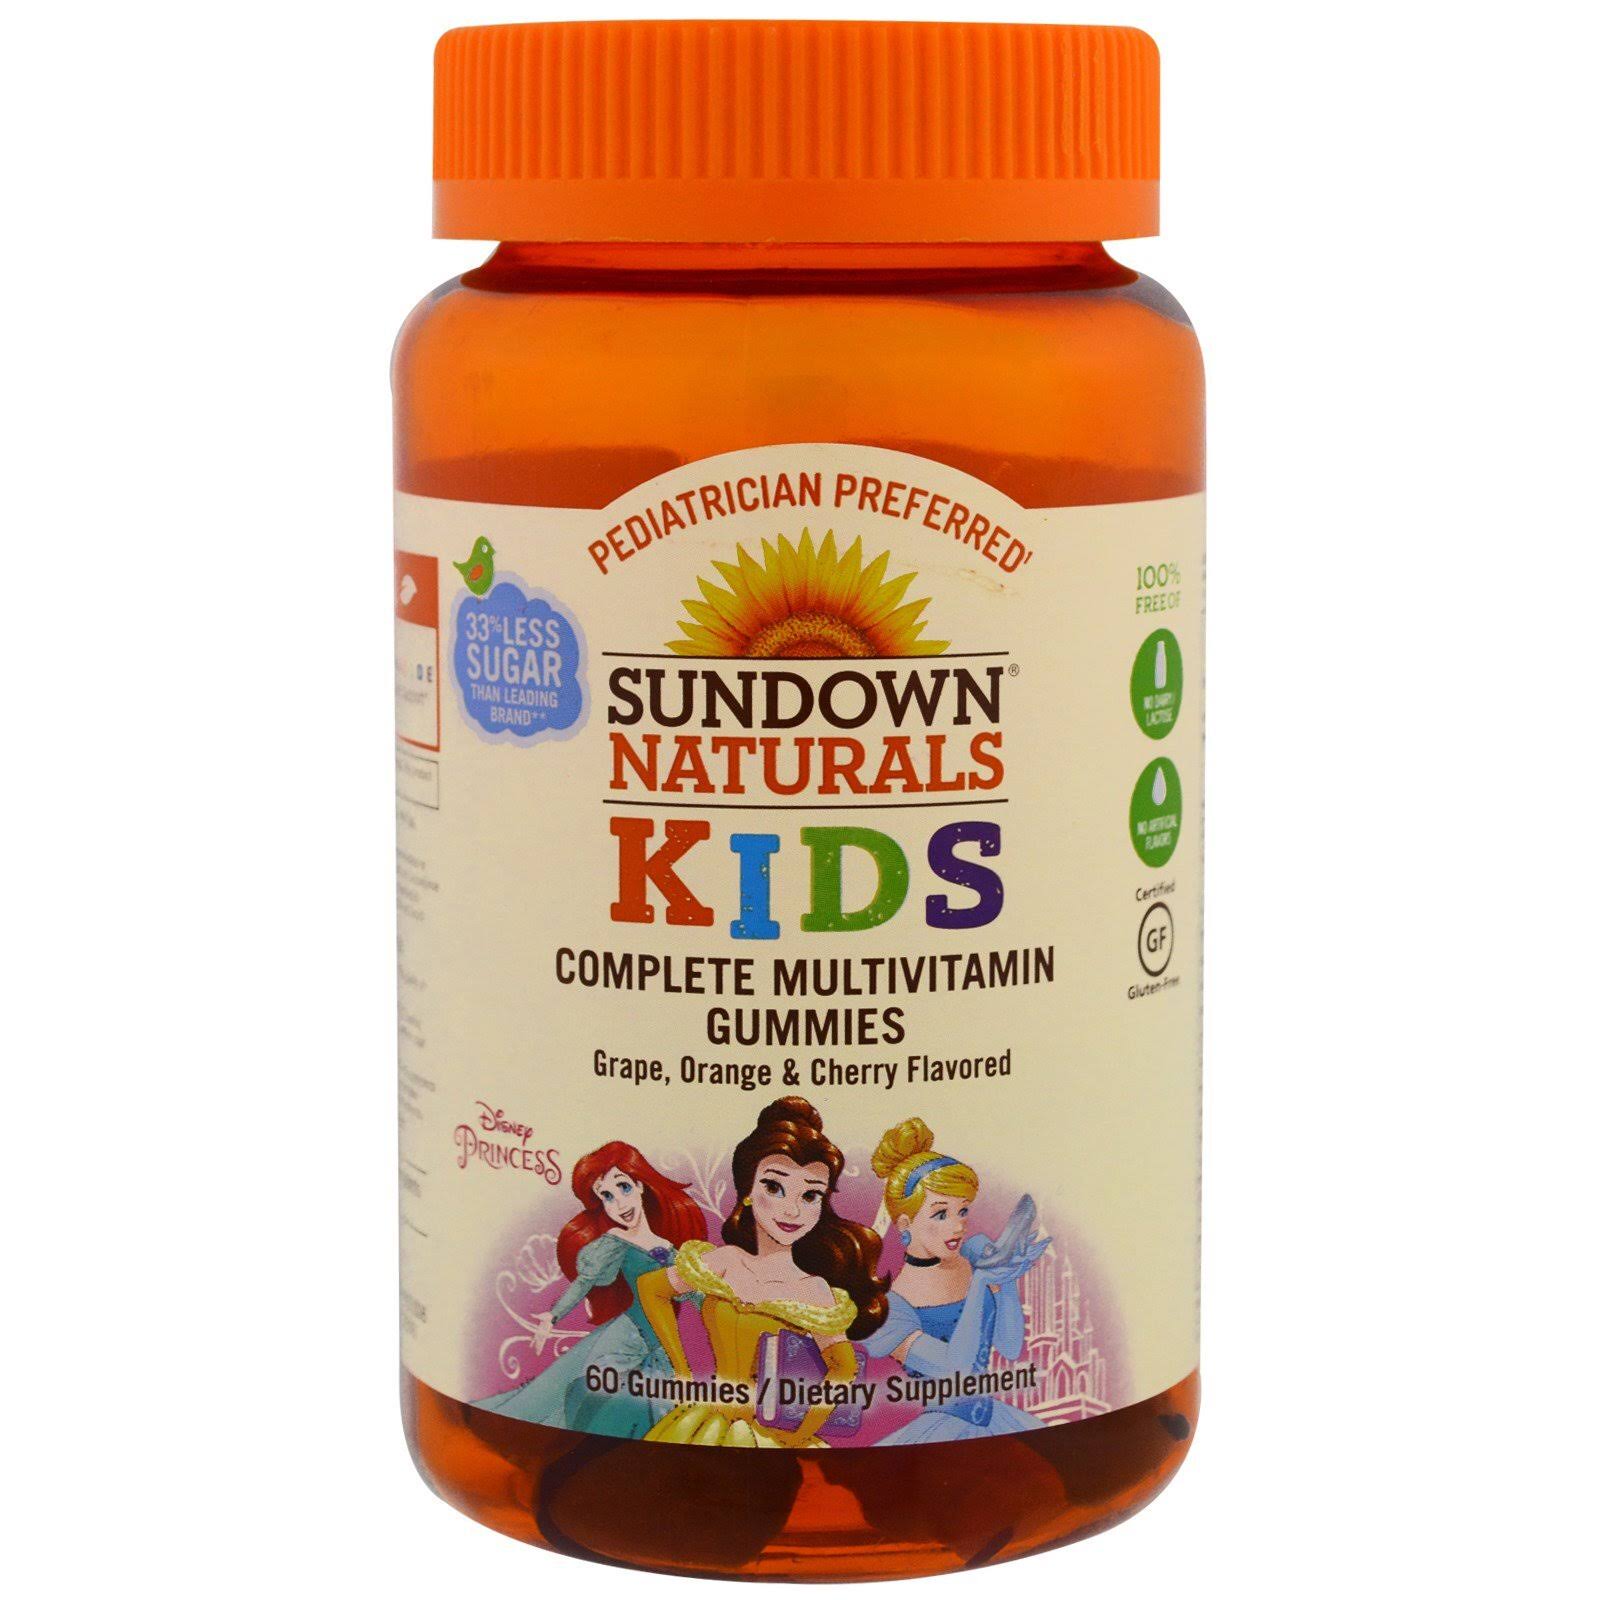 Sundown Naturals Kids Disney Princess Multivitamin Gummies - 60 Count